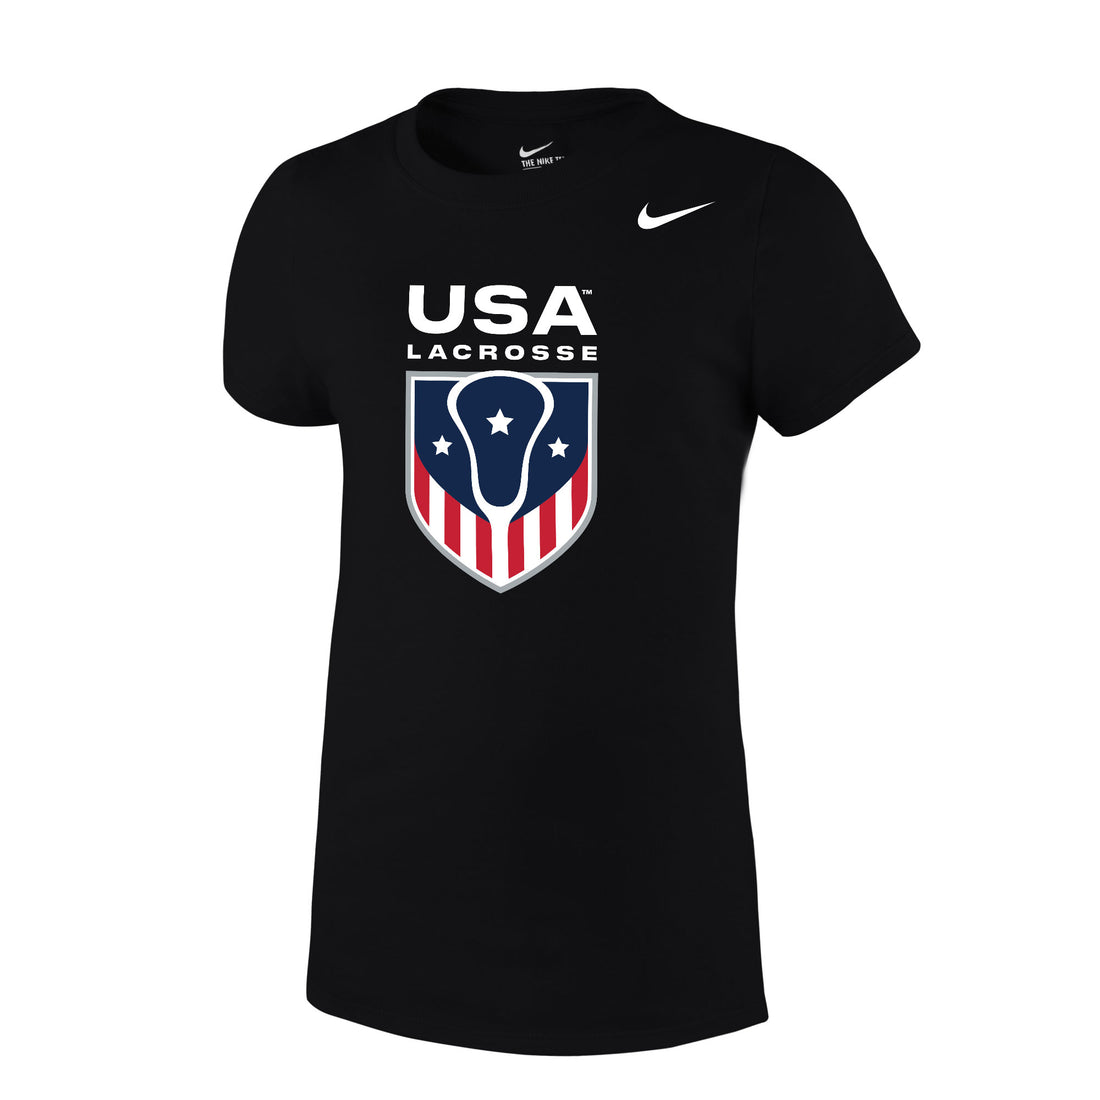 Youth Girl's USA Lacrosse Nike Core Tee